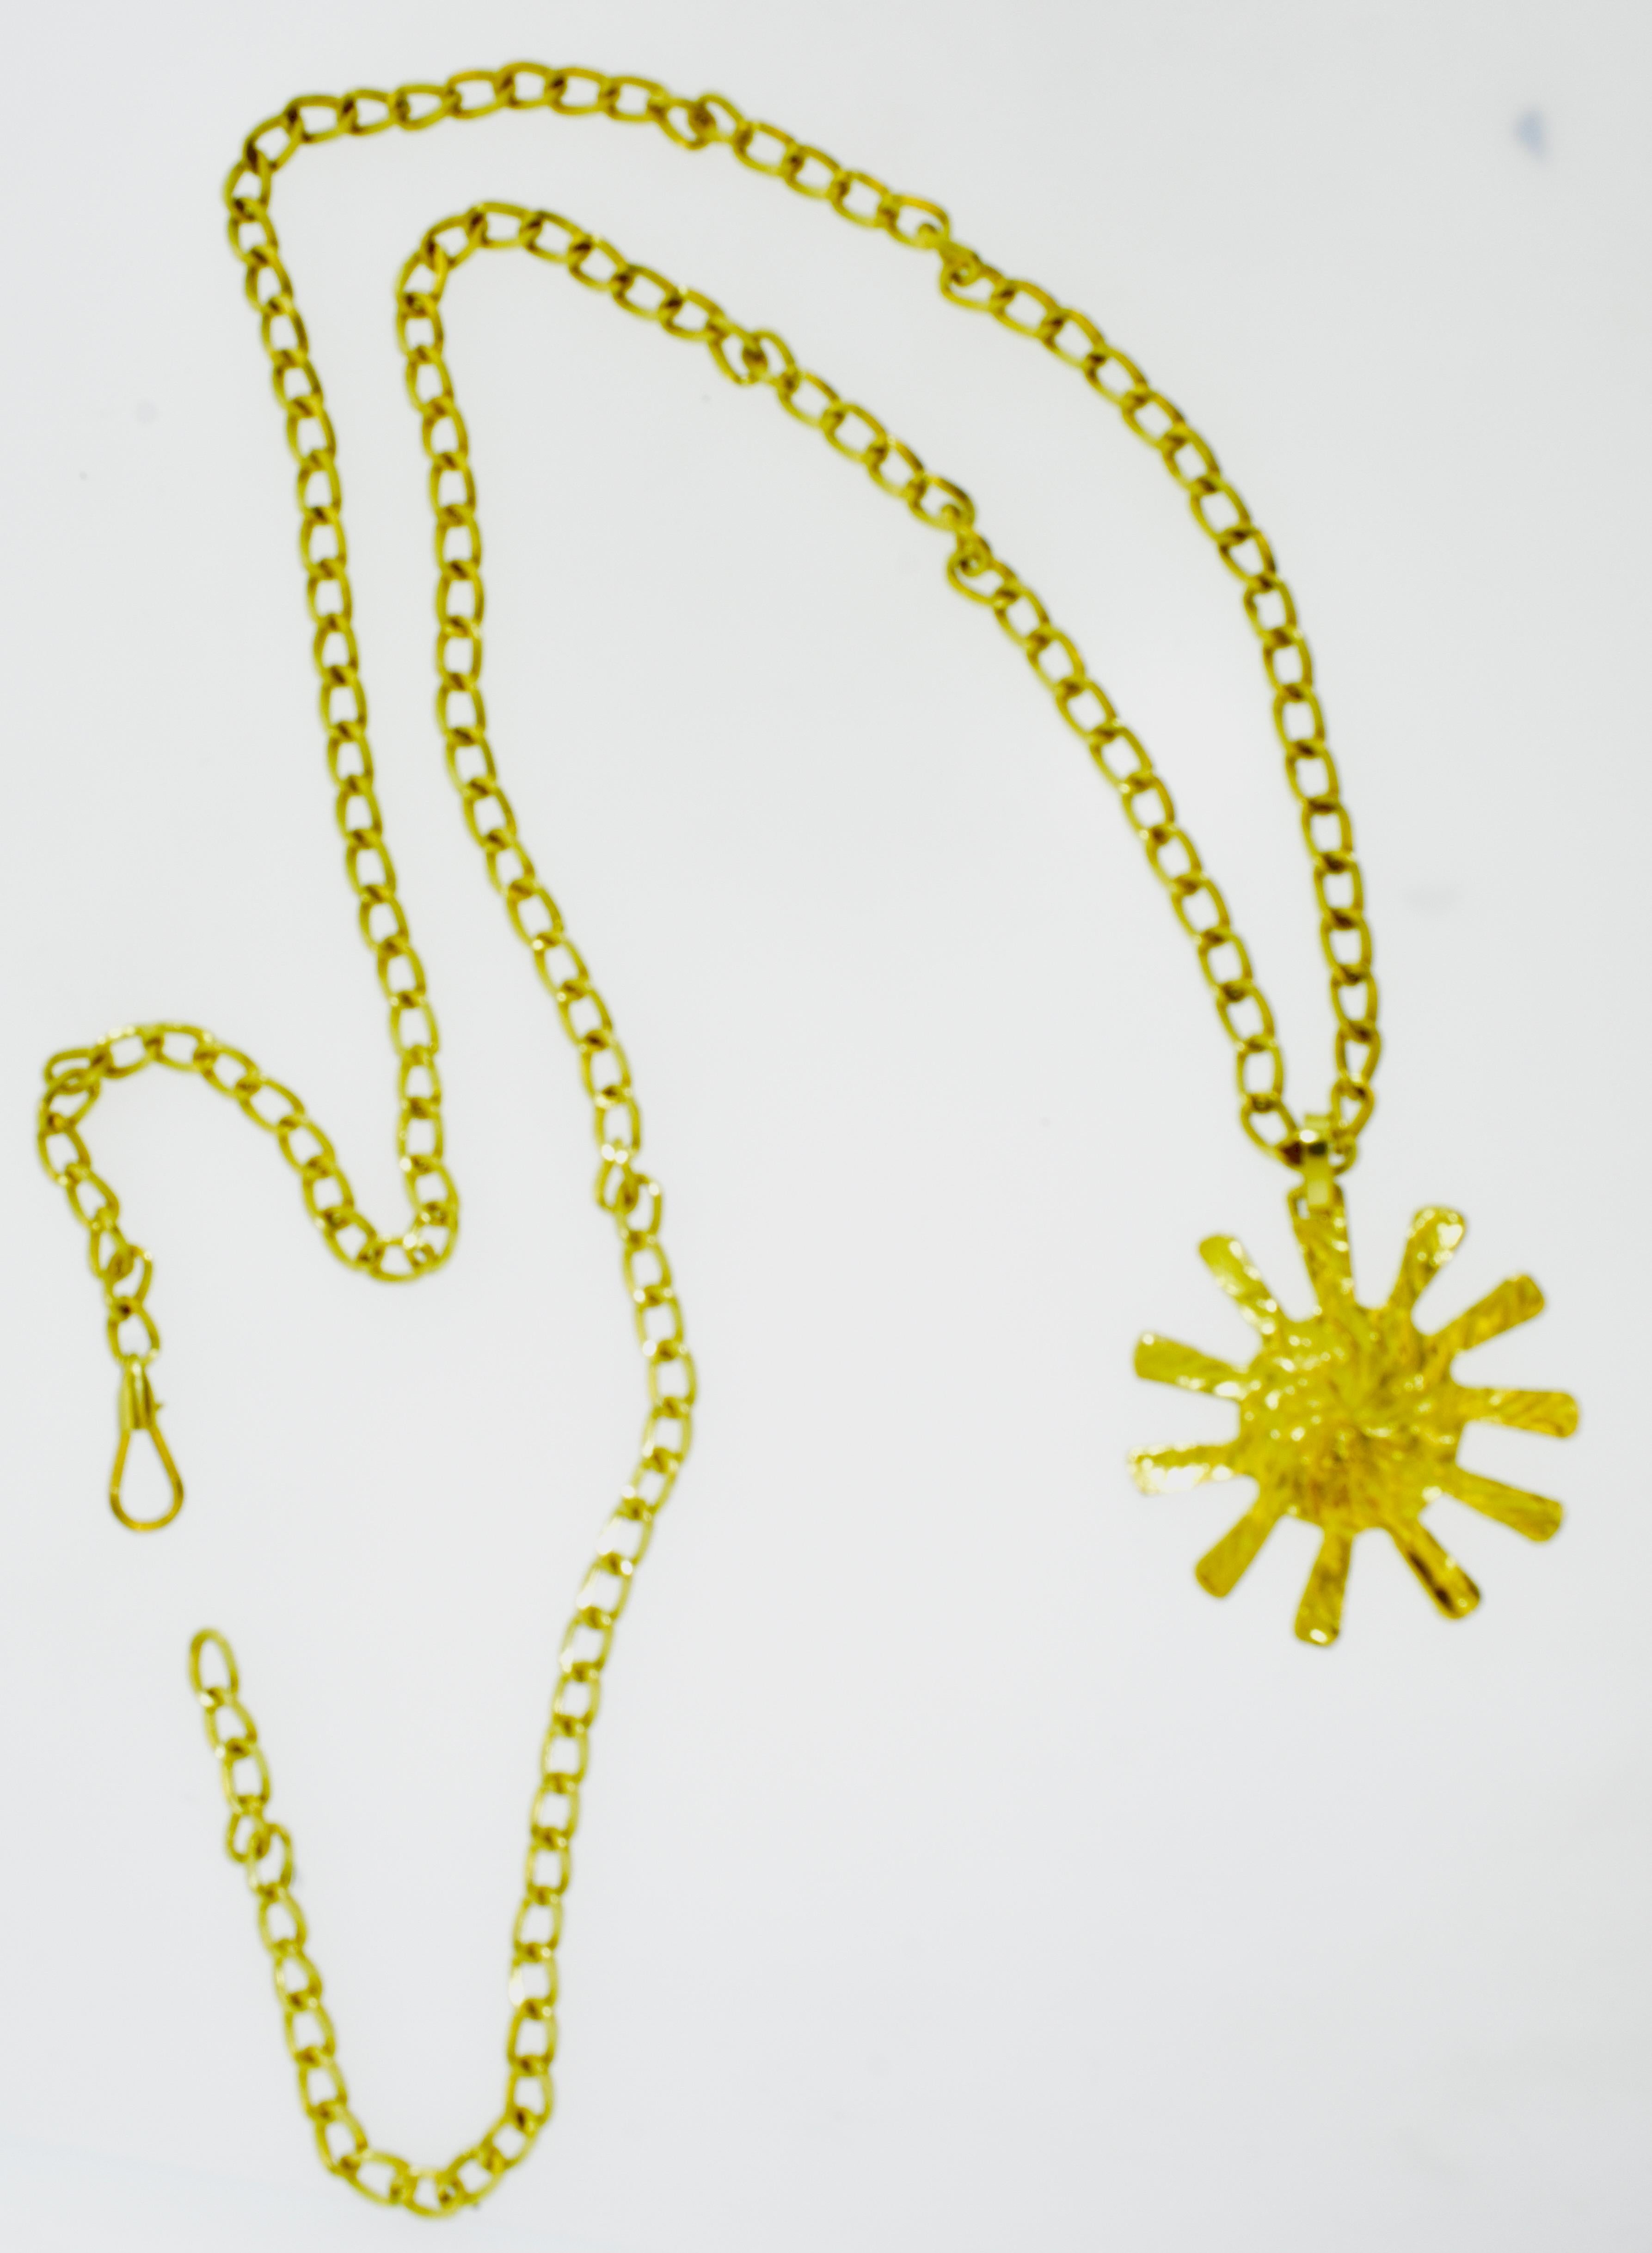 Contemporary Bulgari 18K Gold Long Chain with Bvlgari Iconic Sun Pendant, Italy, c. 1990